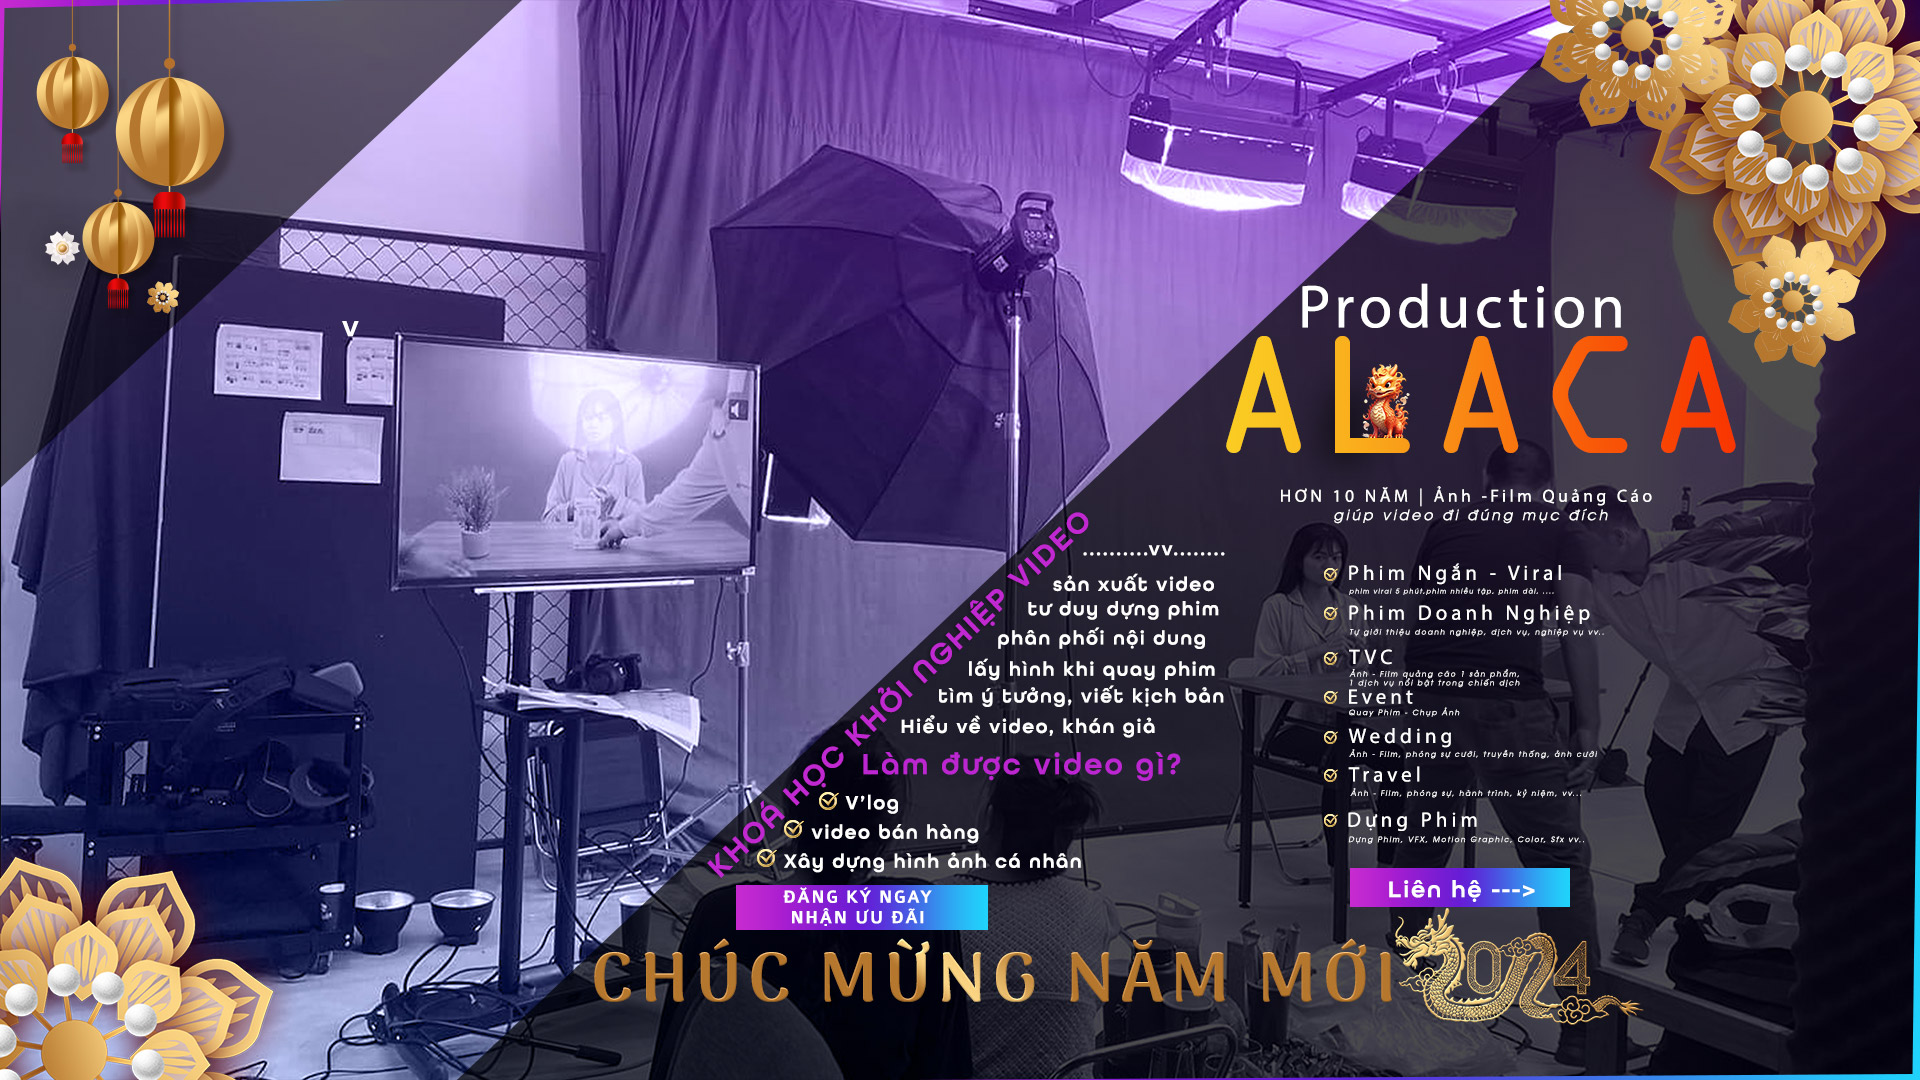 Alaca Production